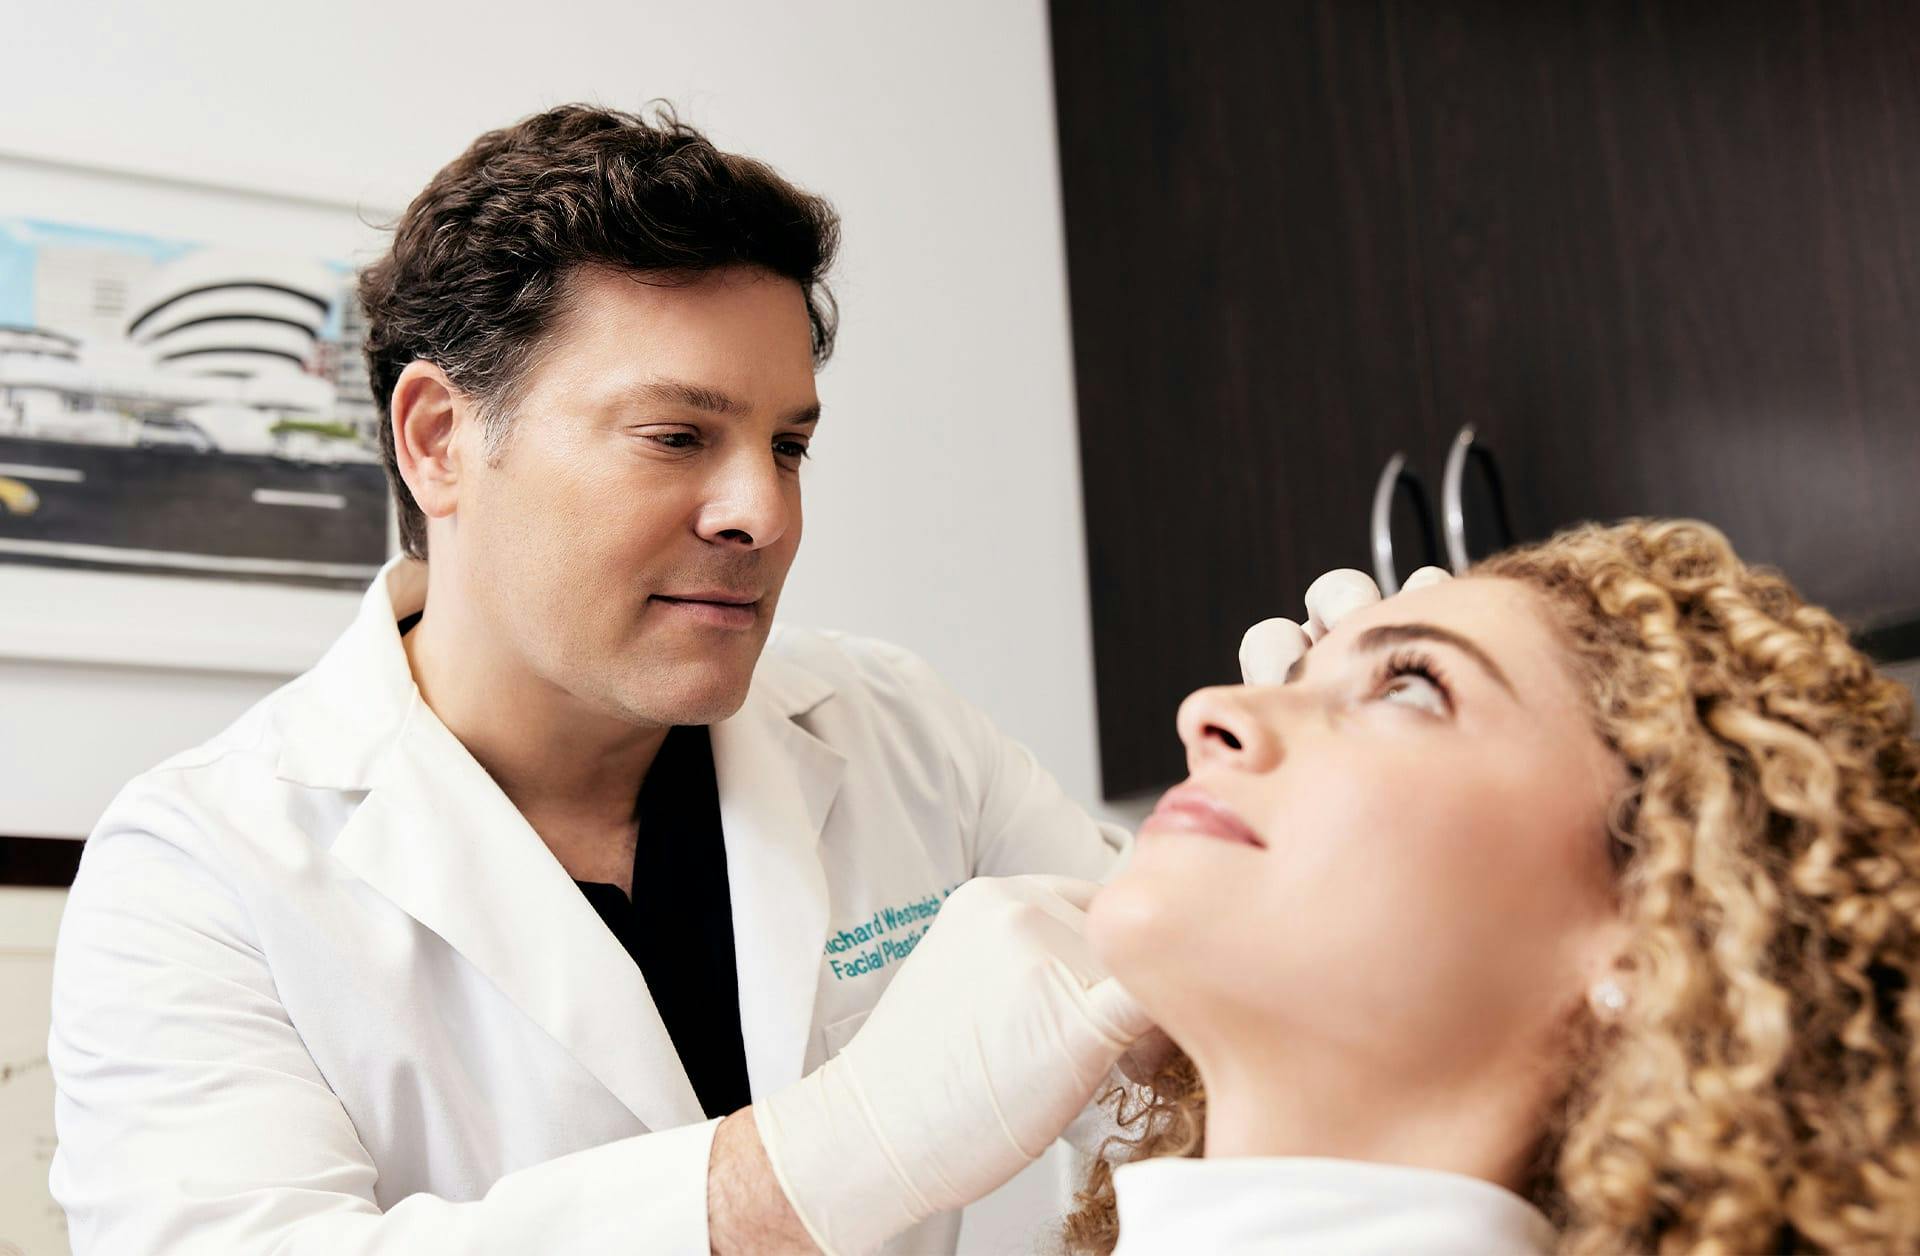 Dr. Westreich touching a patient's face